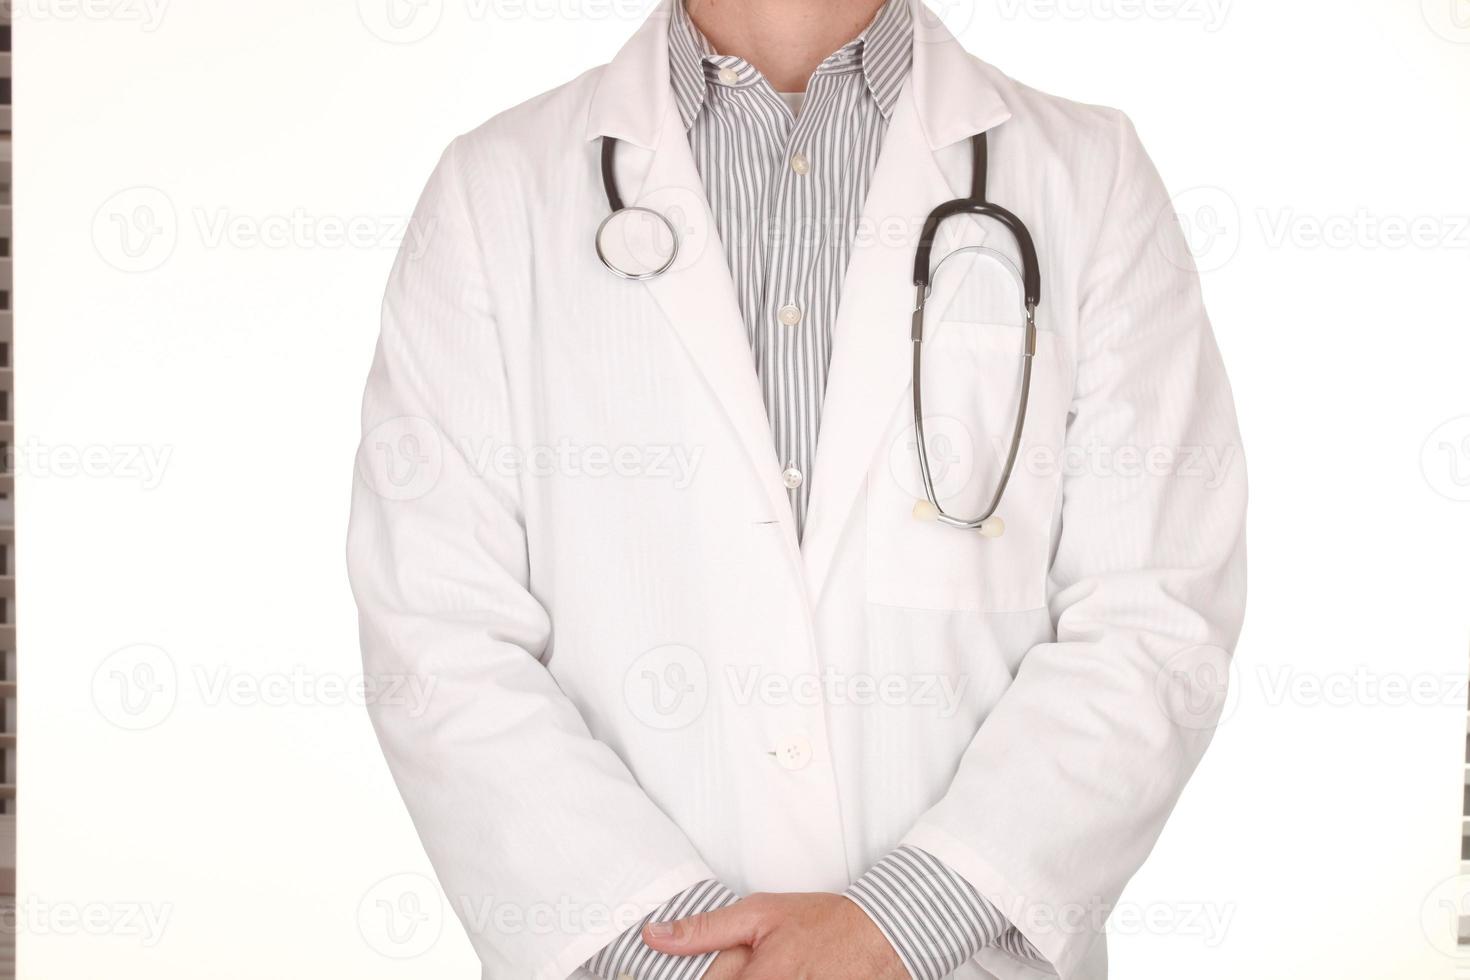 Médecin de sexe masculin portant un stéthoscope sur fond blanc photo